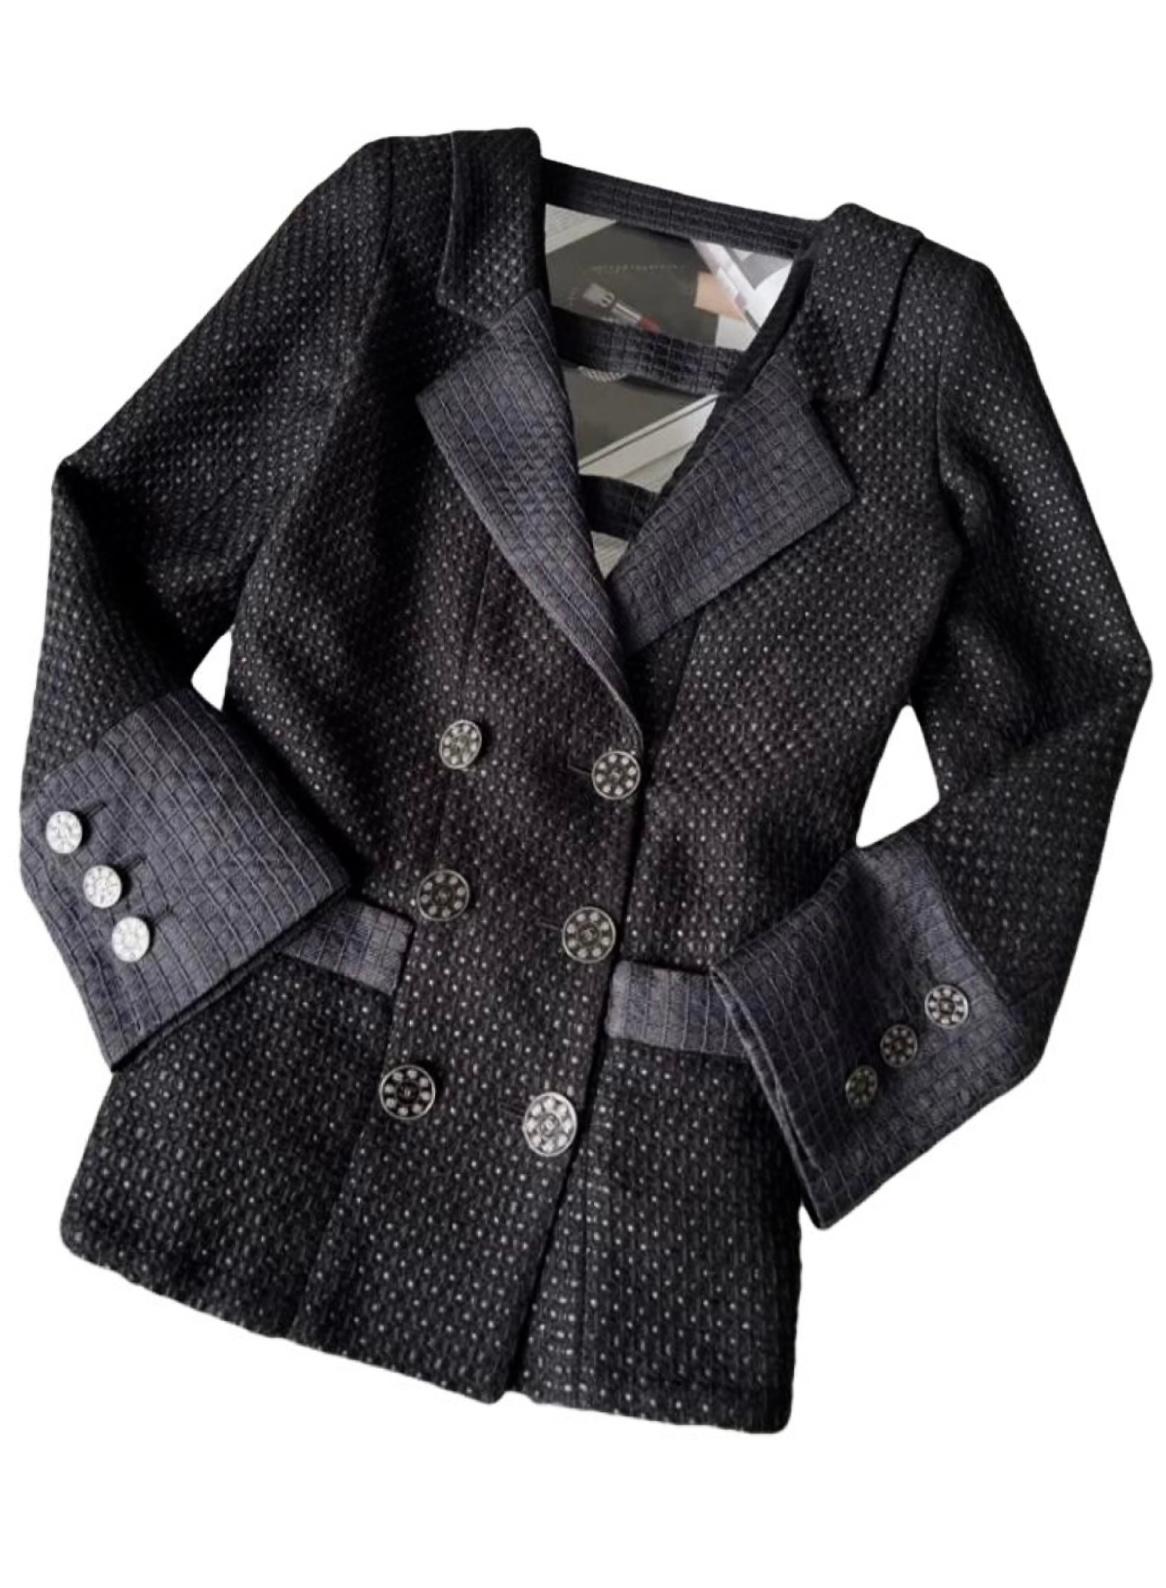 Women's or Men's Chanel Runway Paris / Seoul Black Tweed Jacket For Sale